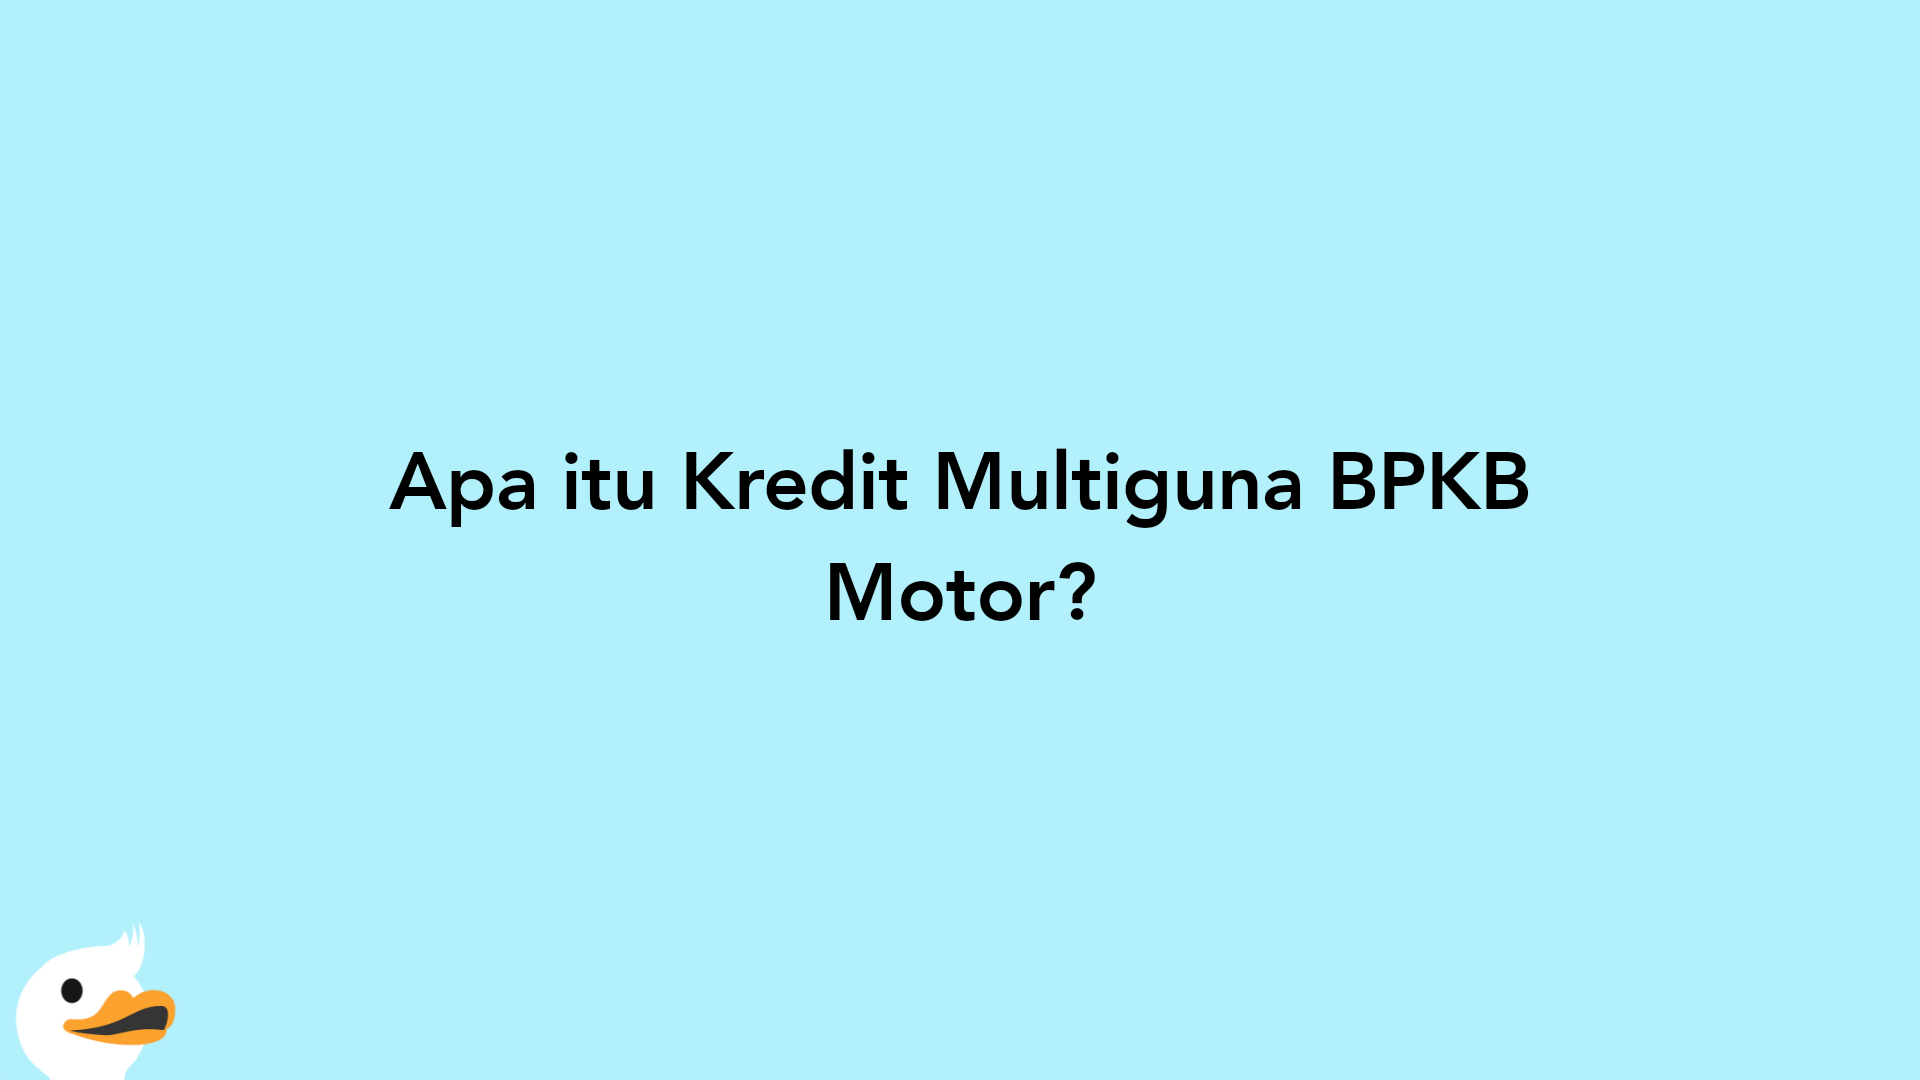 Apa itu Kredit Multiguna BPKB Motor?